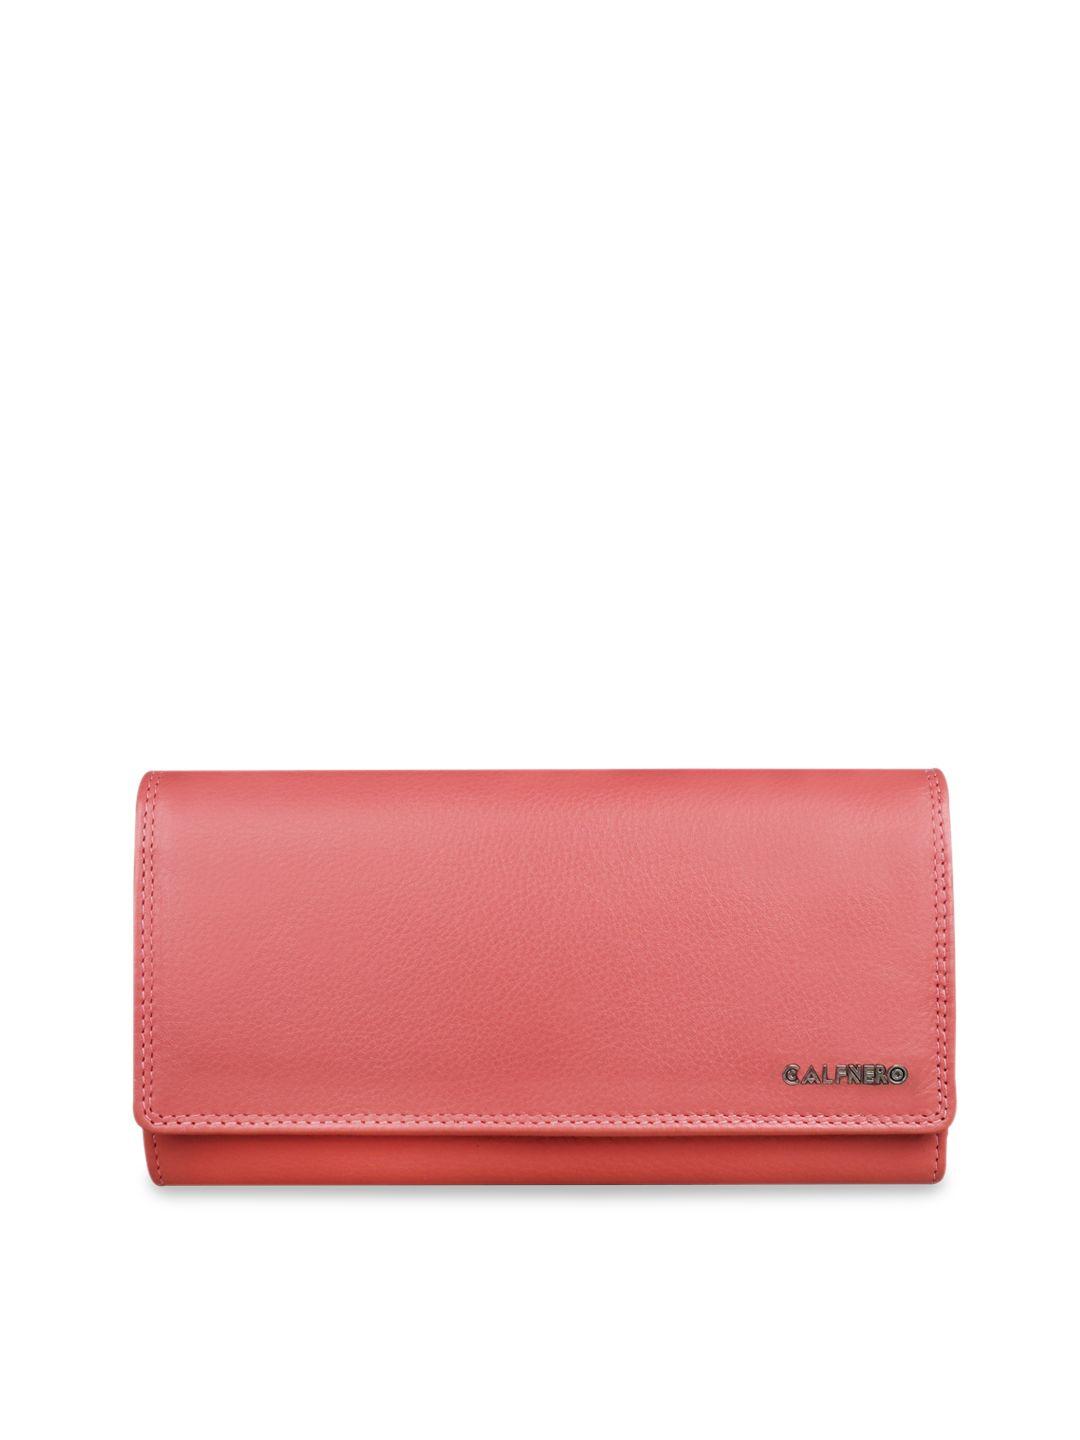 calfnero rose solid leather purse clutch